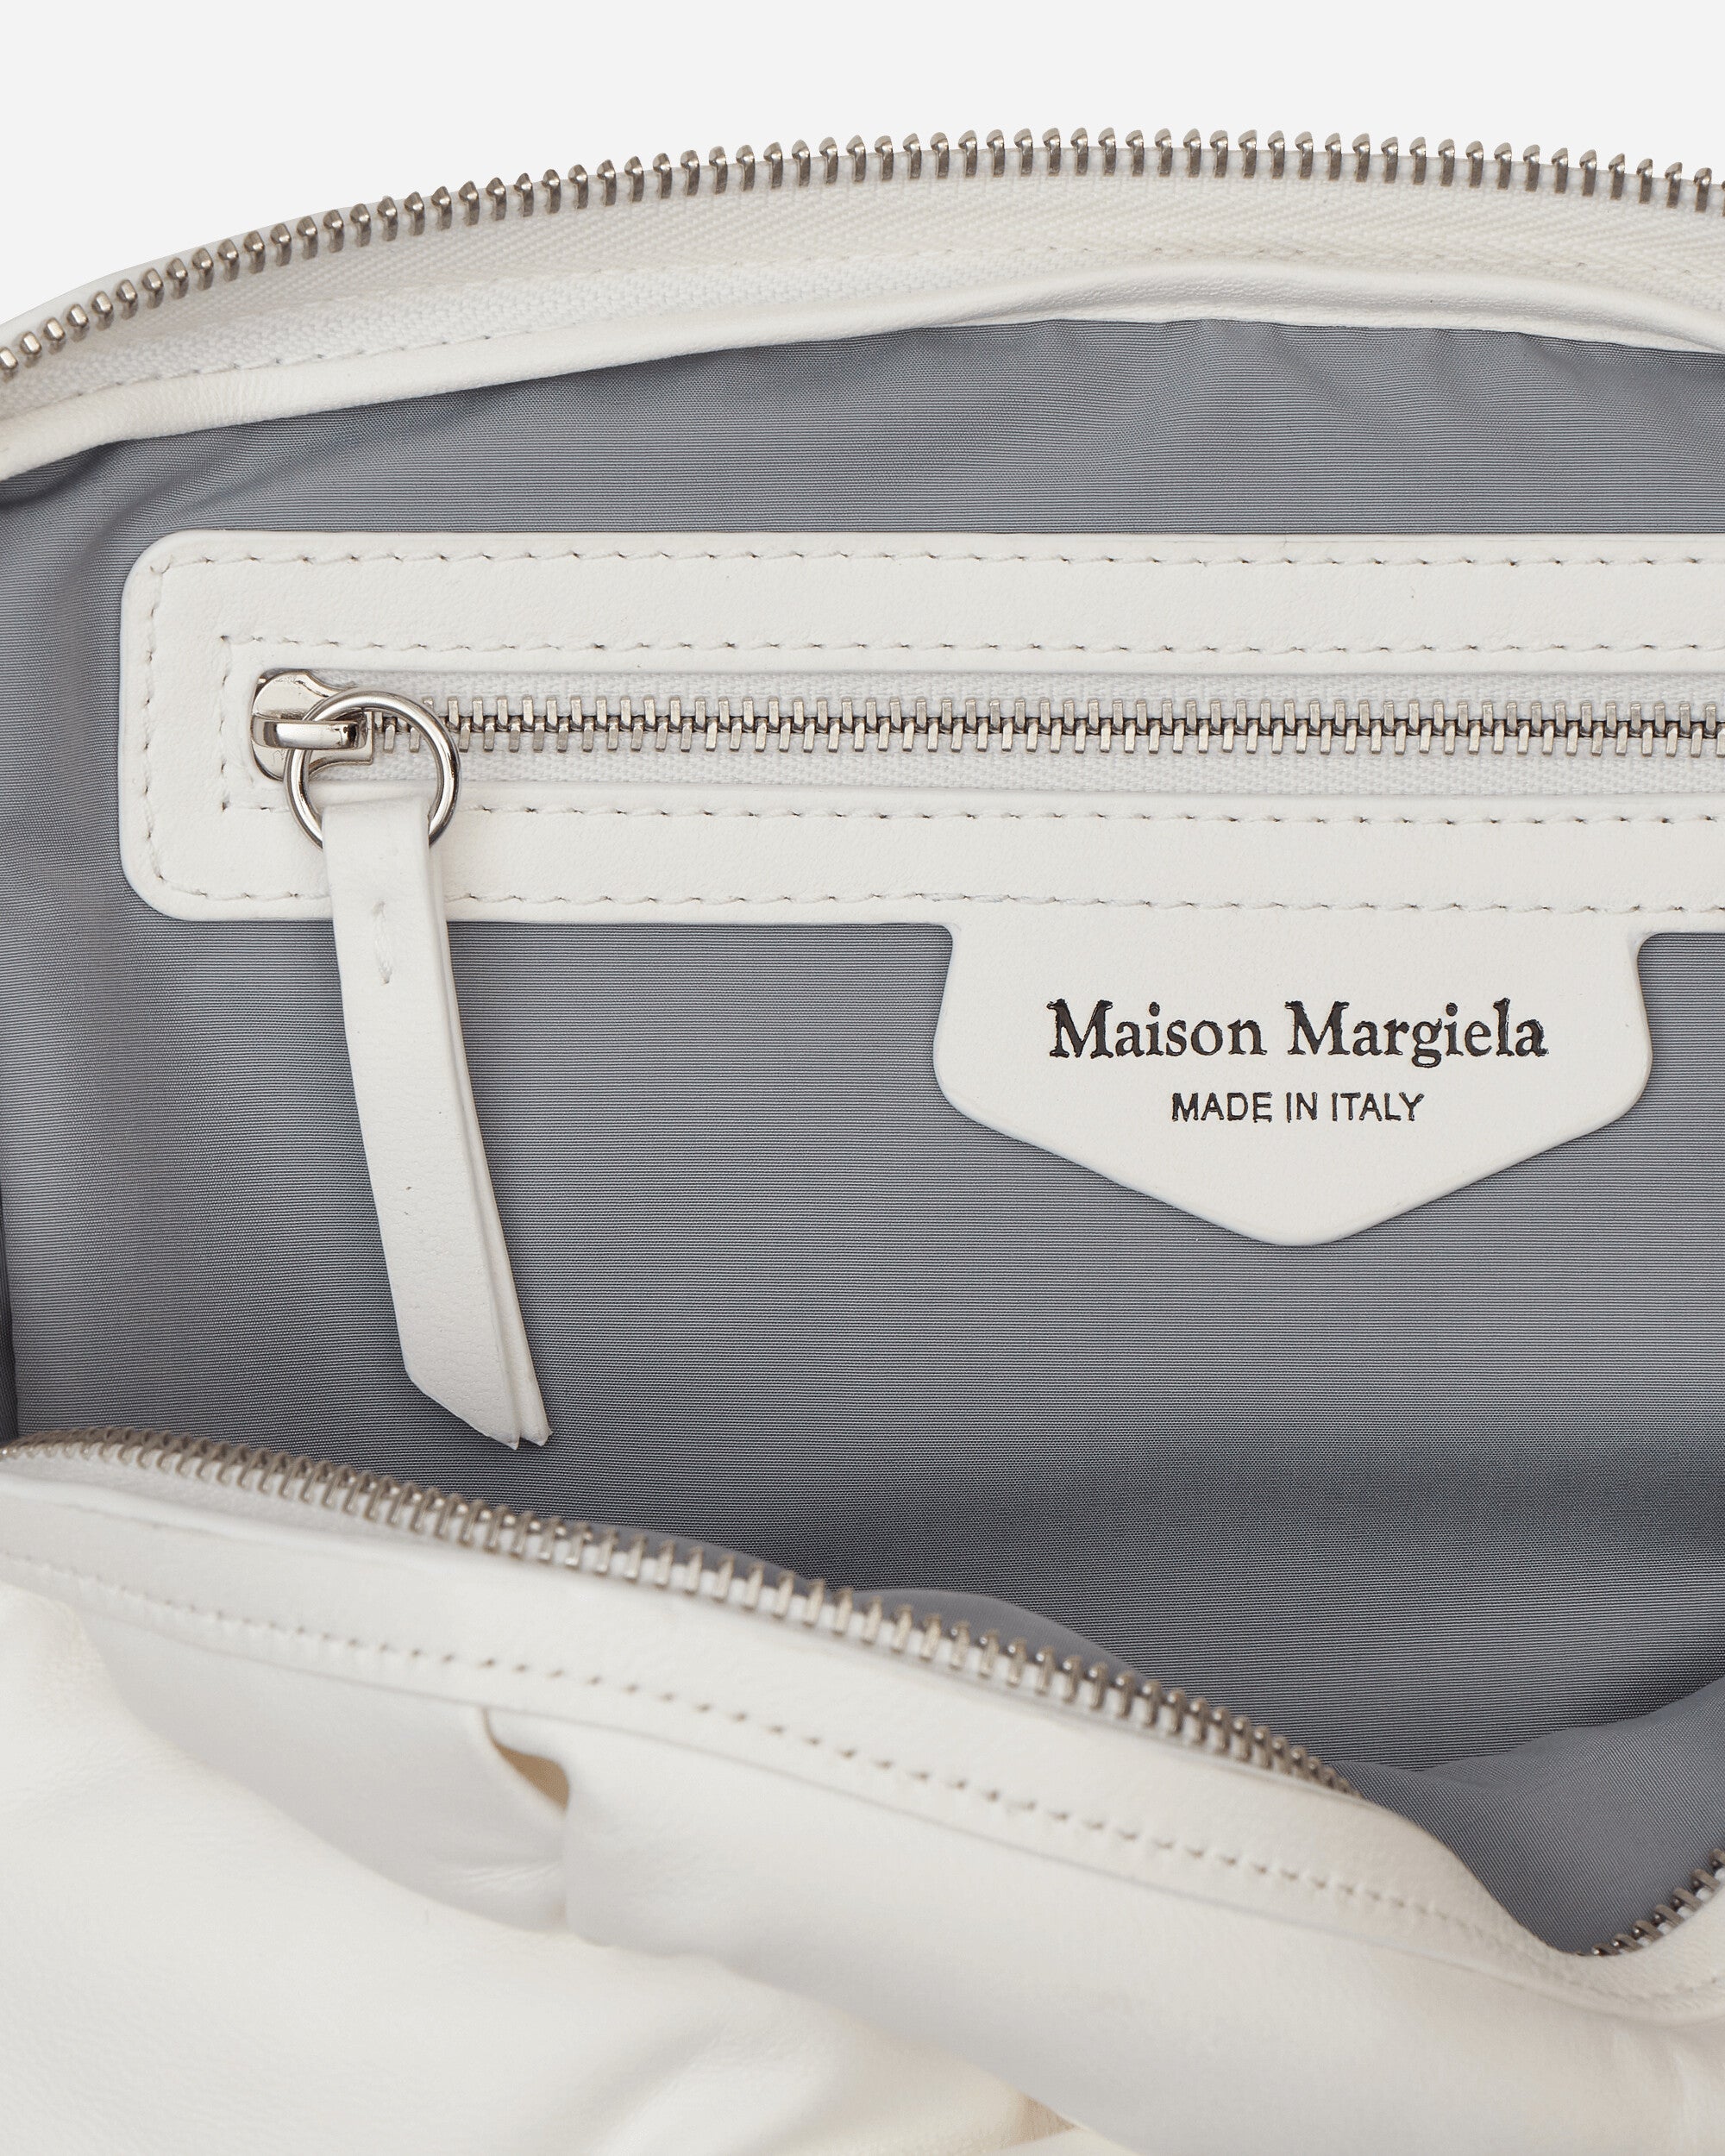 Maison Margiela Marsupio White Bags and Backpacks Waistbags SB1WB0006 T1003